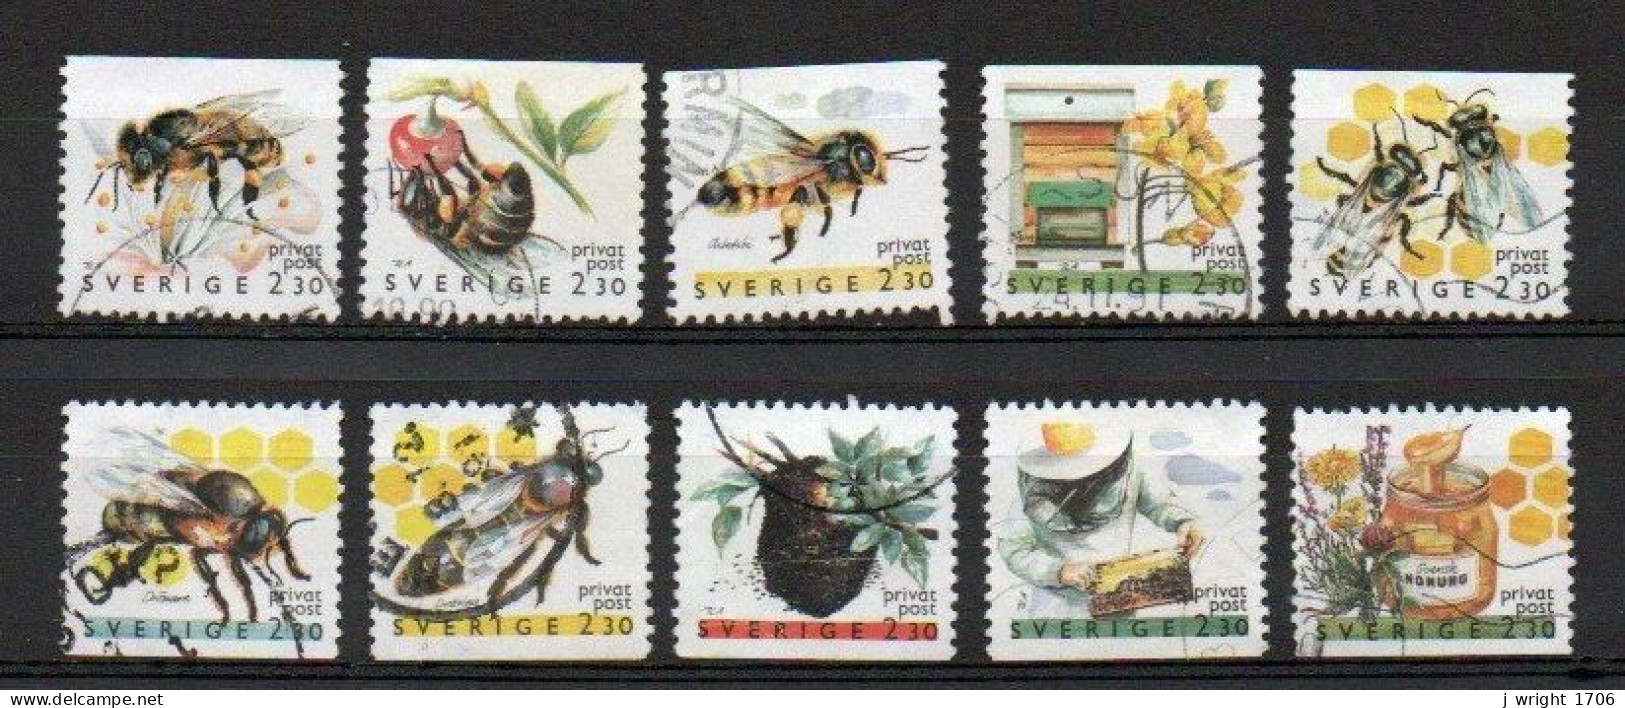 Sweden, 1990, Rebate Stamps/Honey Bees, Set, USED - Gebraucht